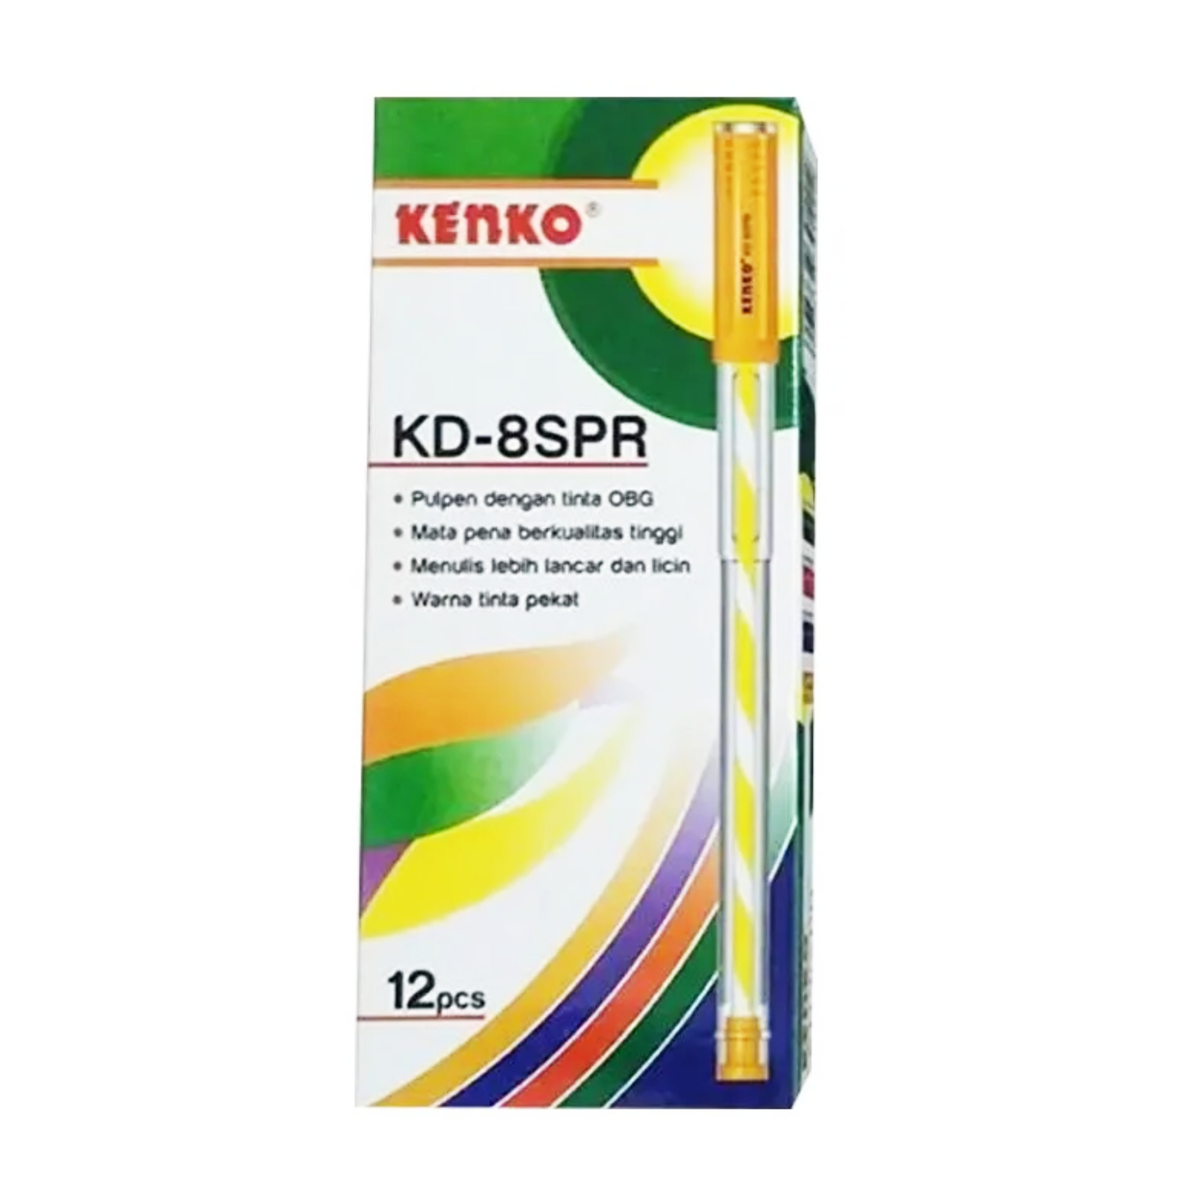 Kenko Pulpen KD-8SPR 3s Hitam